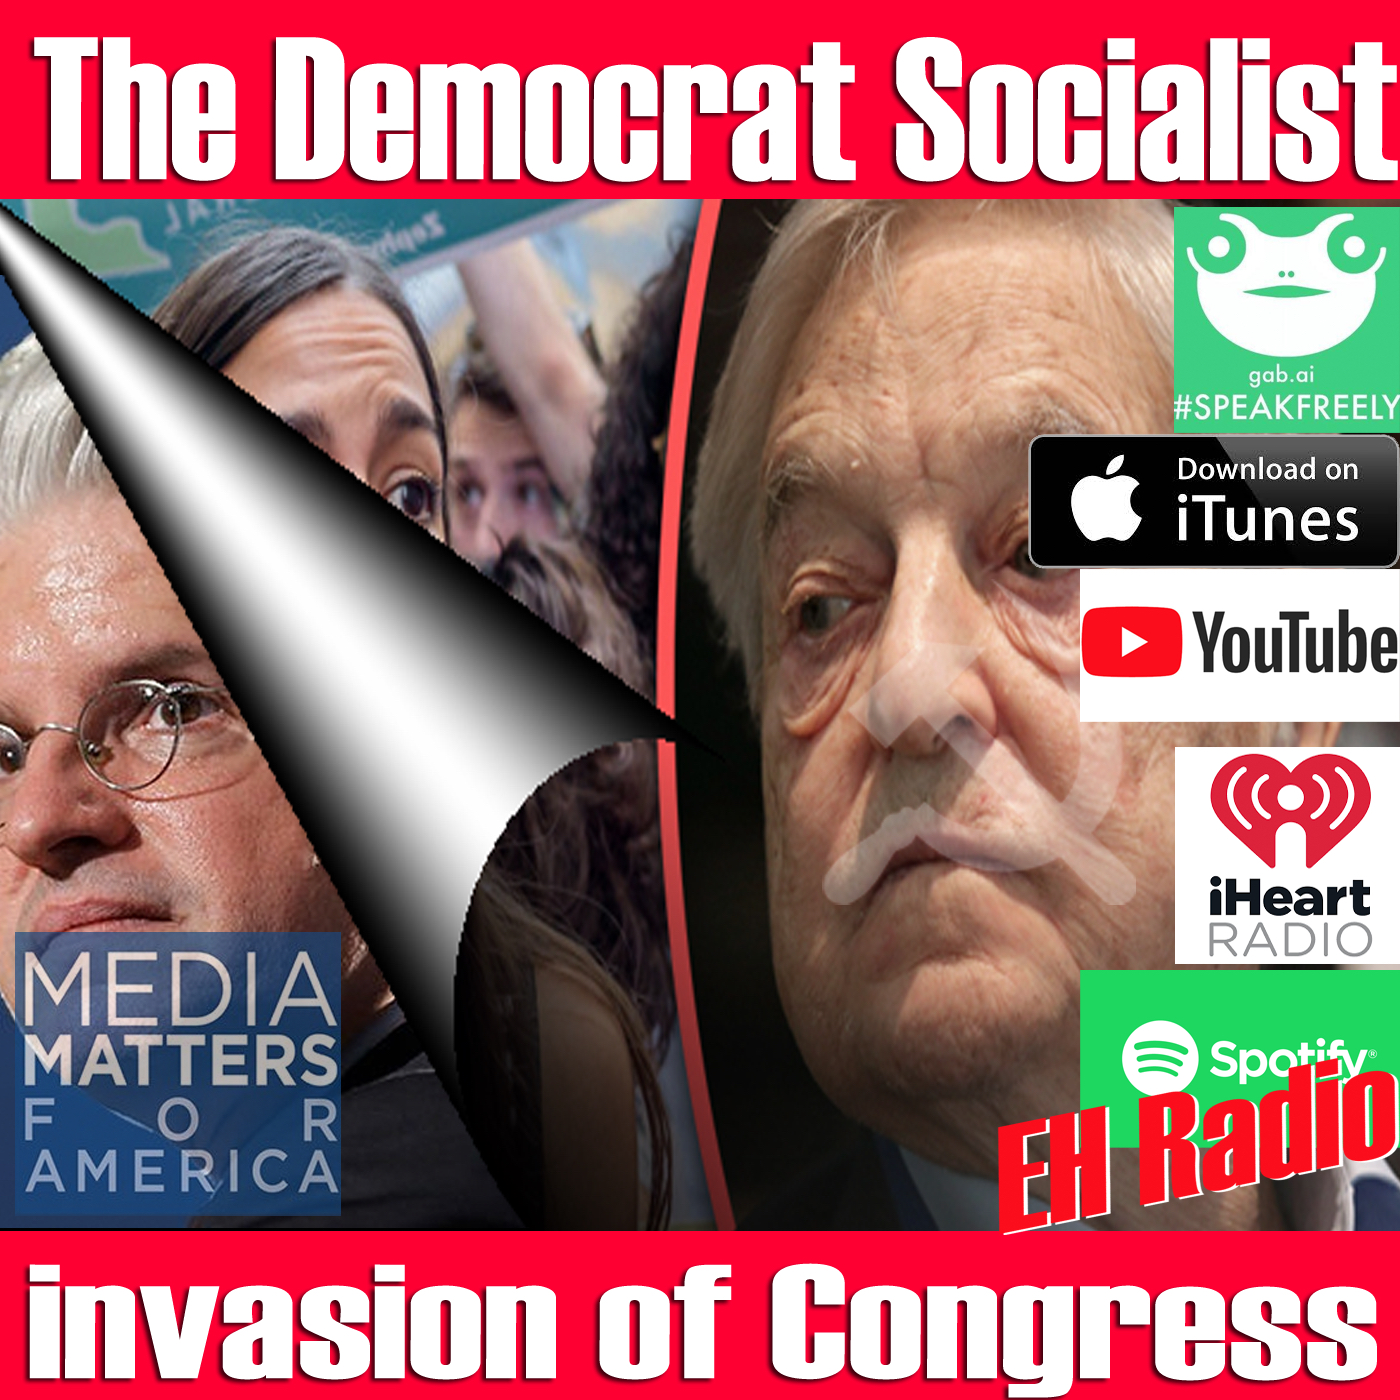 The Democrat Socialist invasion of Congress